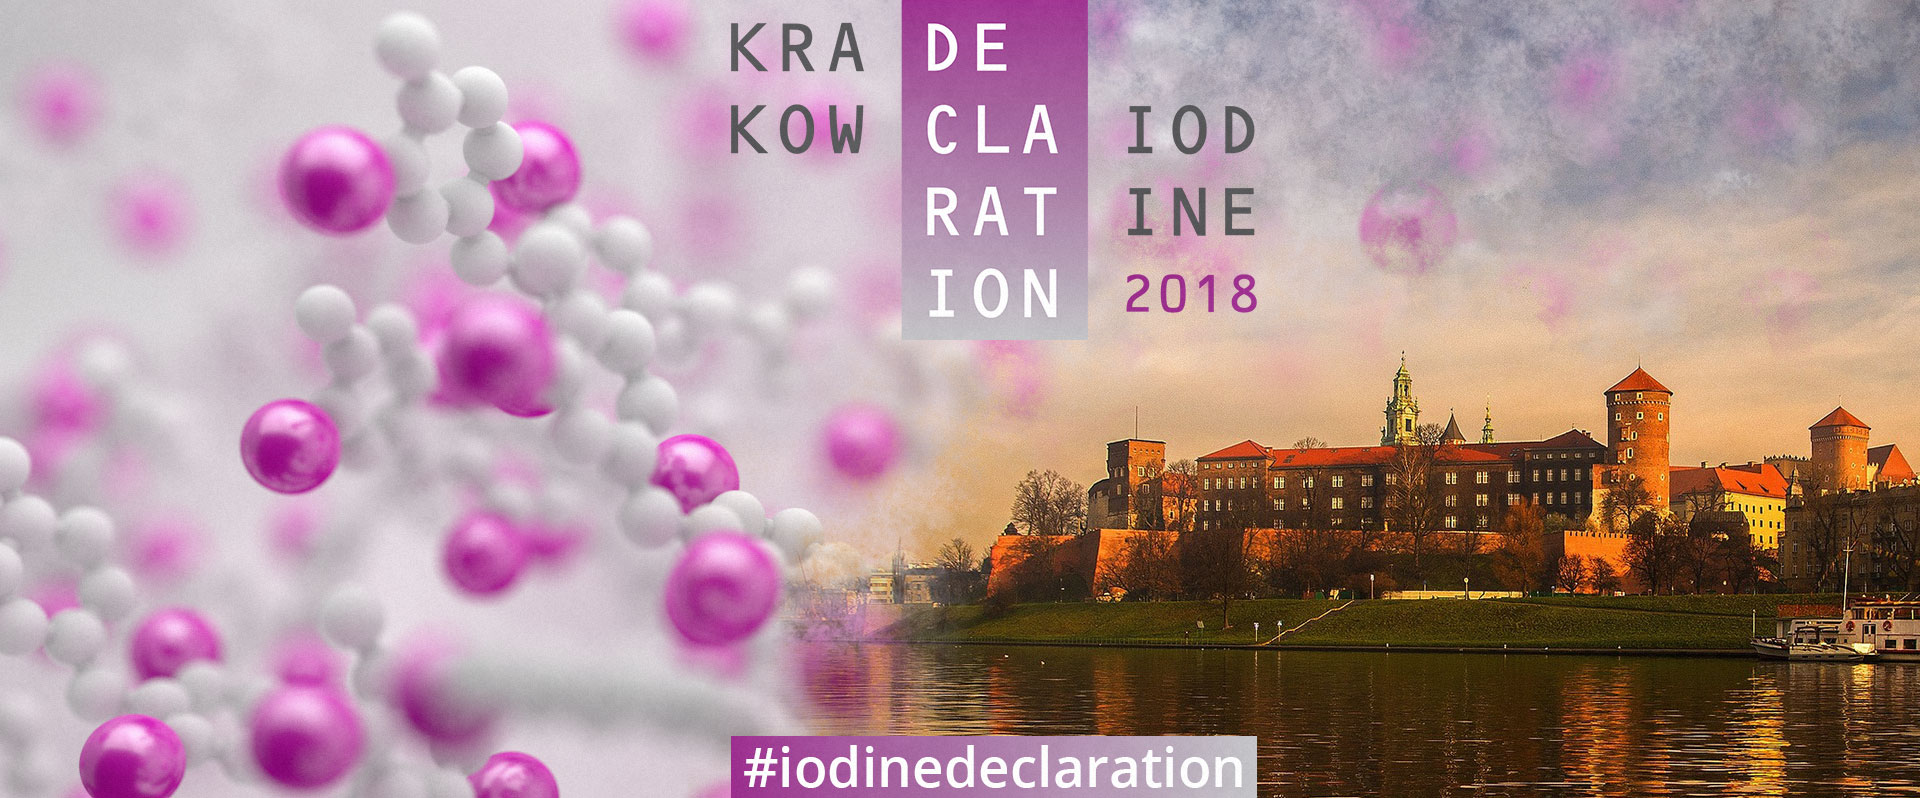 The Krakow Declaration on Iodine